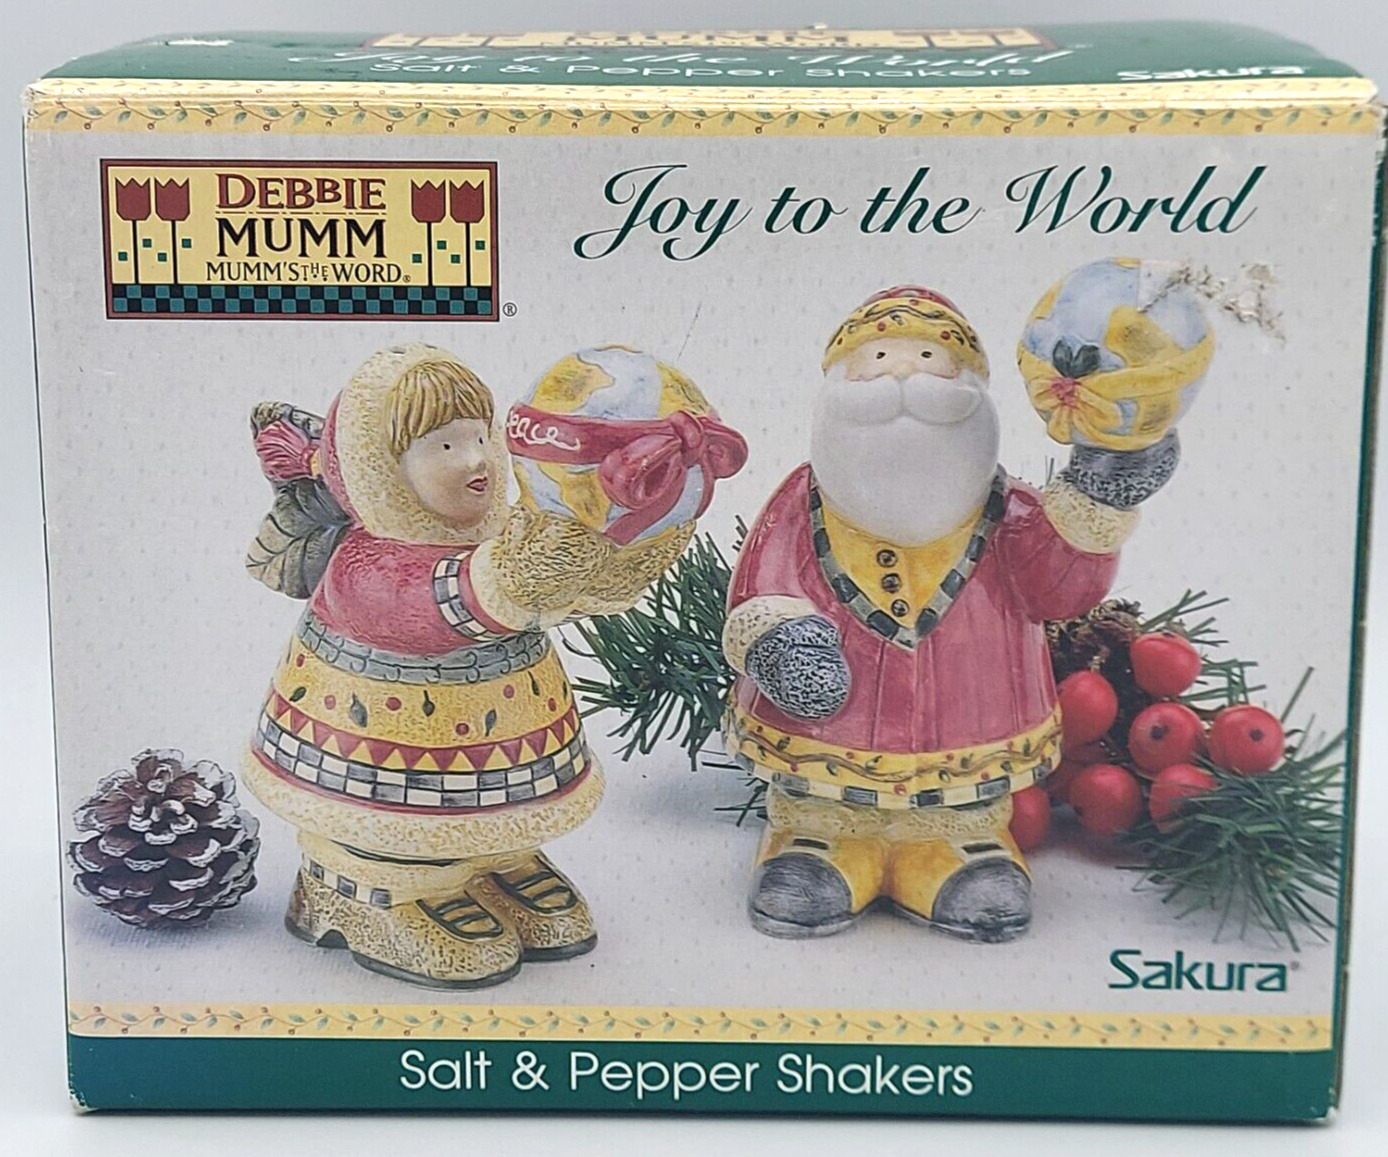 DEBBIE MUMM Christmas Joy to the World Salt & Pepper Shakers Sakura New Open Box